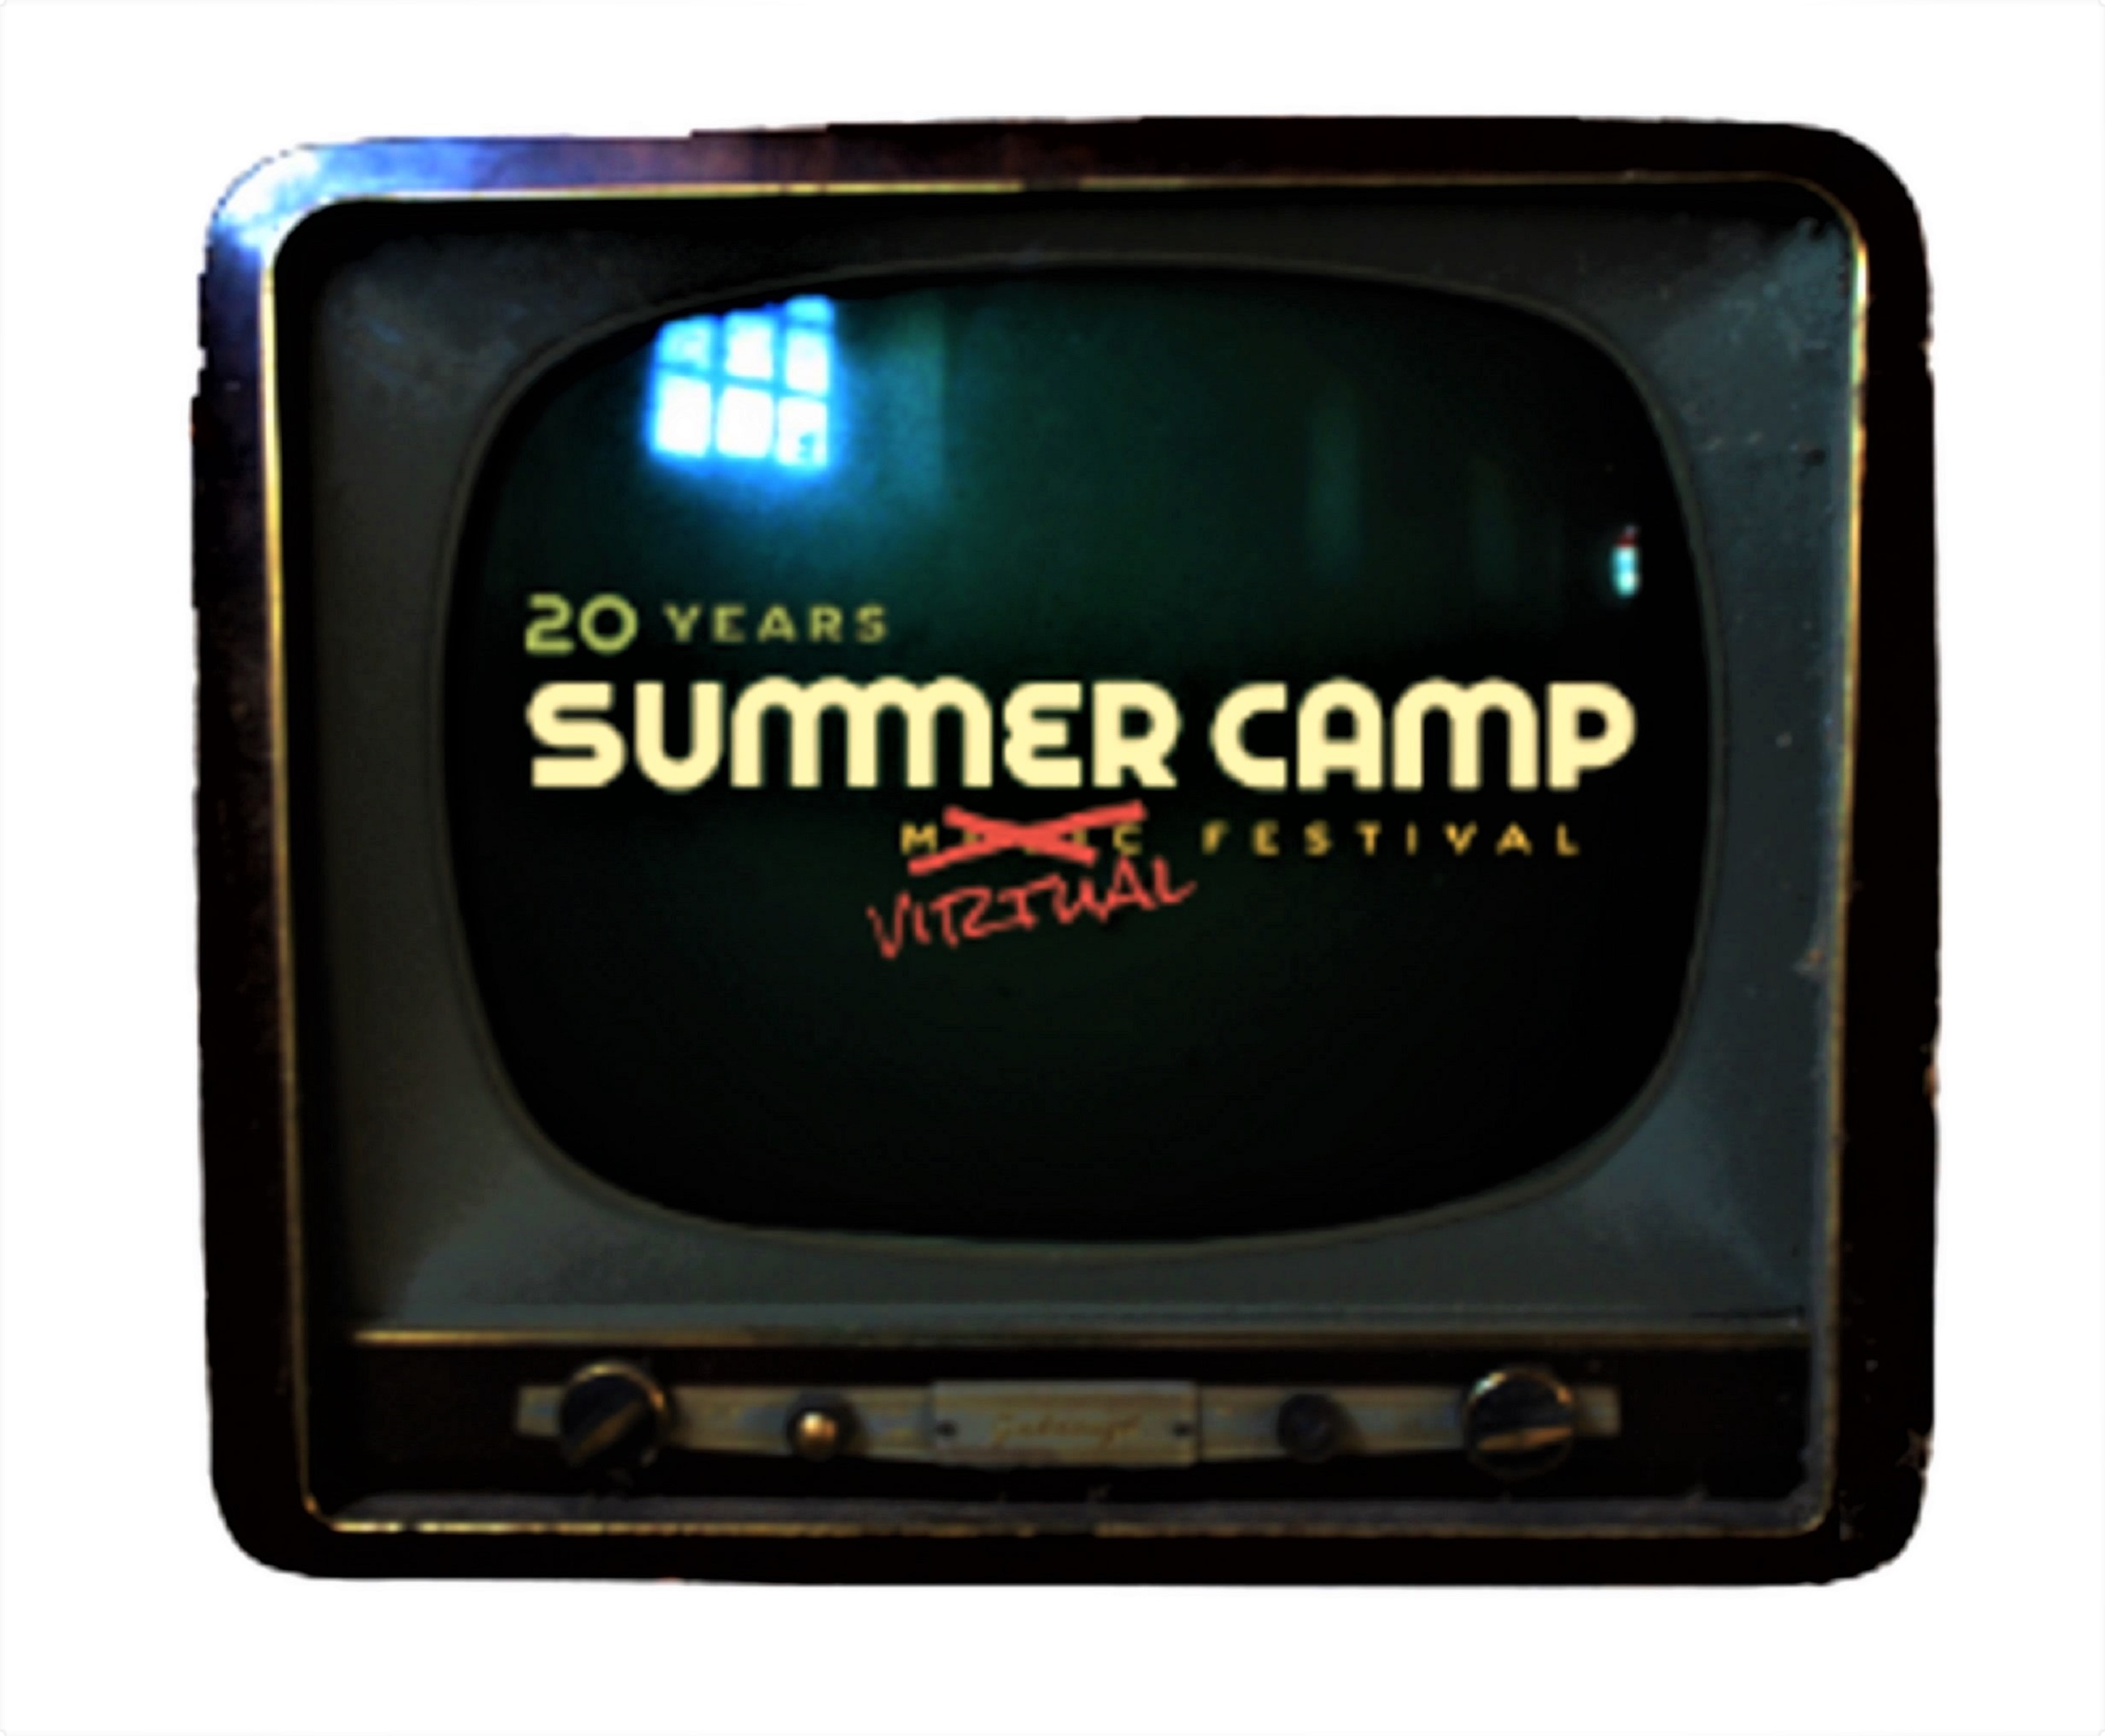 SUMMER CAMP MUSIC FESTIVAL ANNOUNCES 20 YEAR RETROSPECTIVE VIRTUAL FESTIVAL